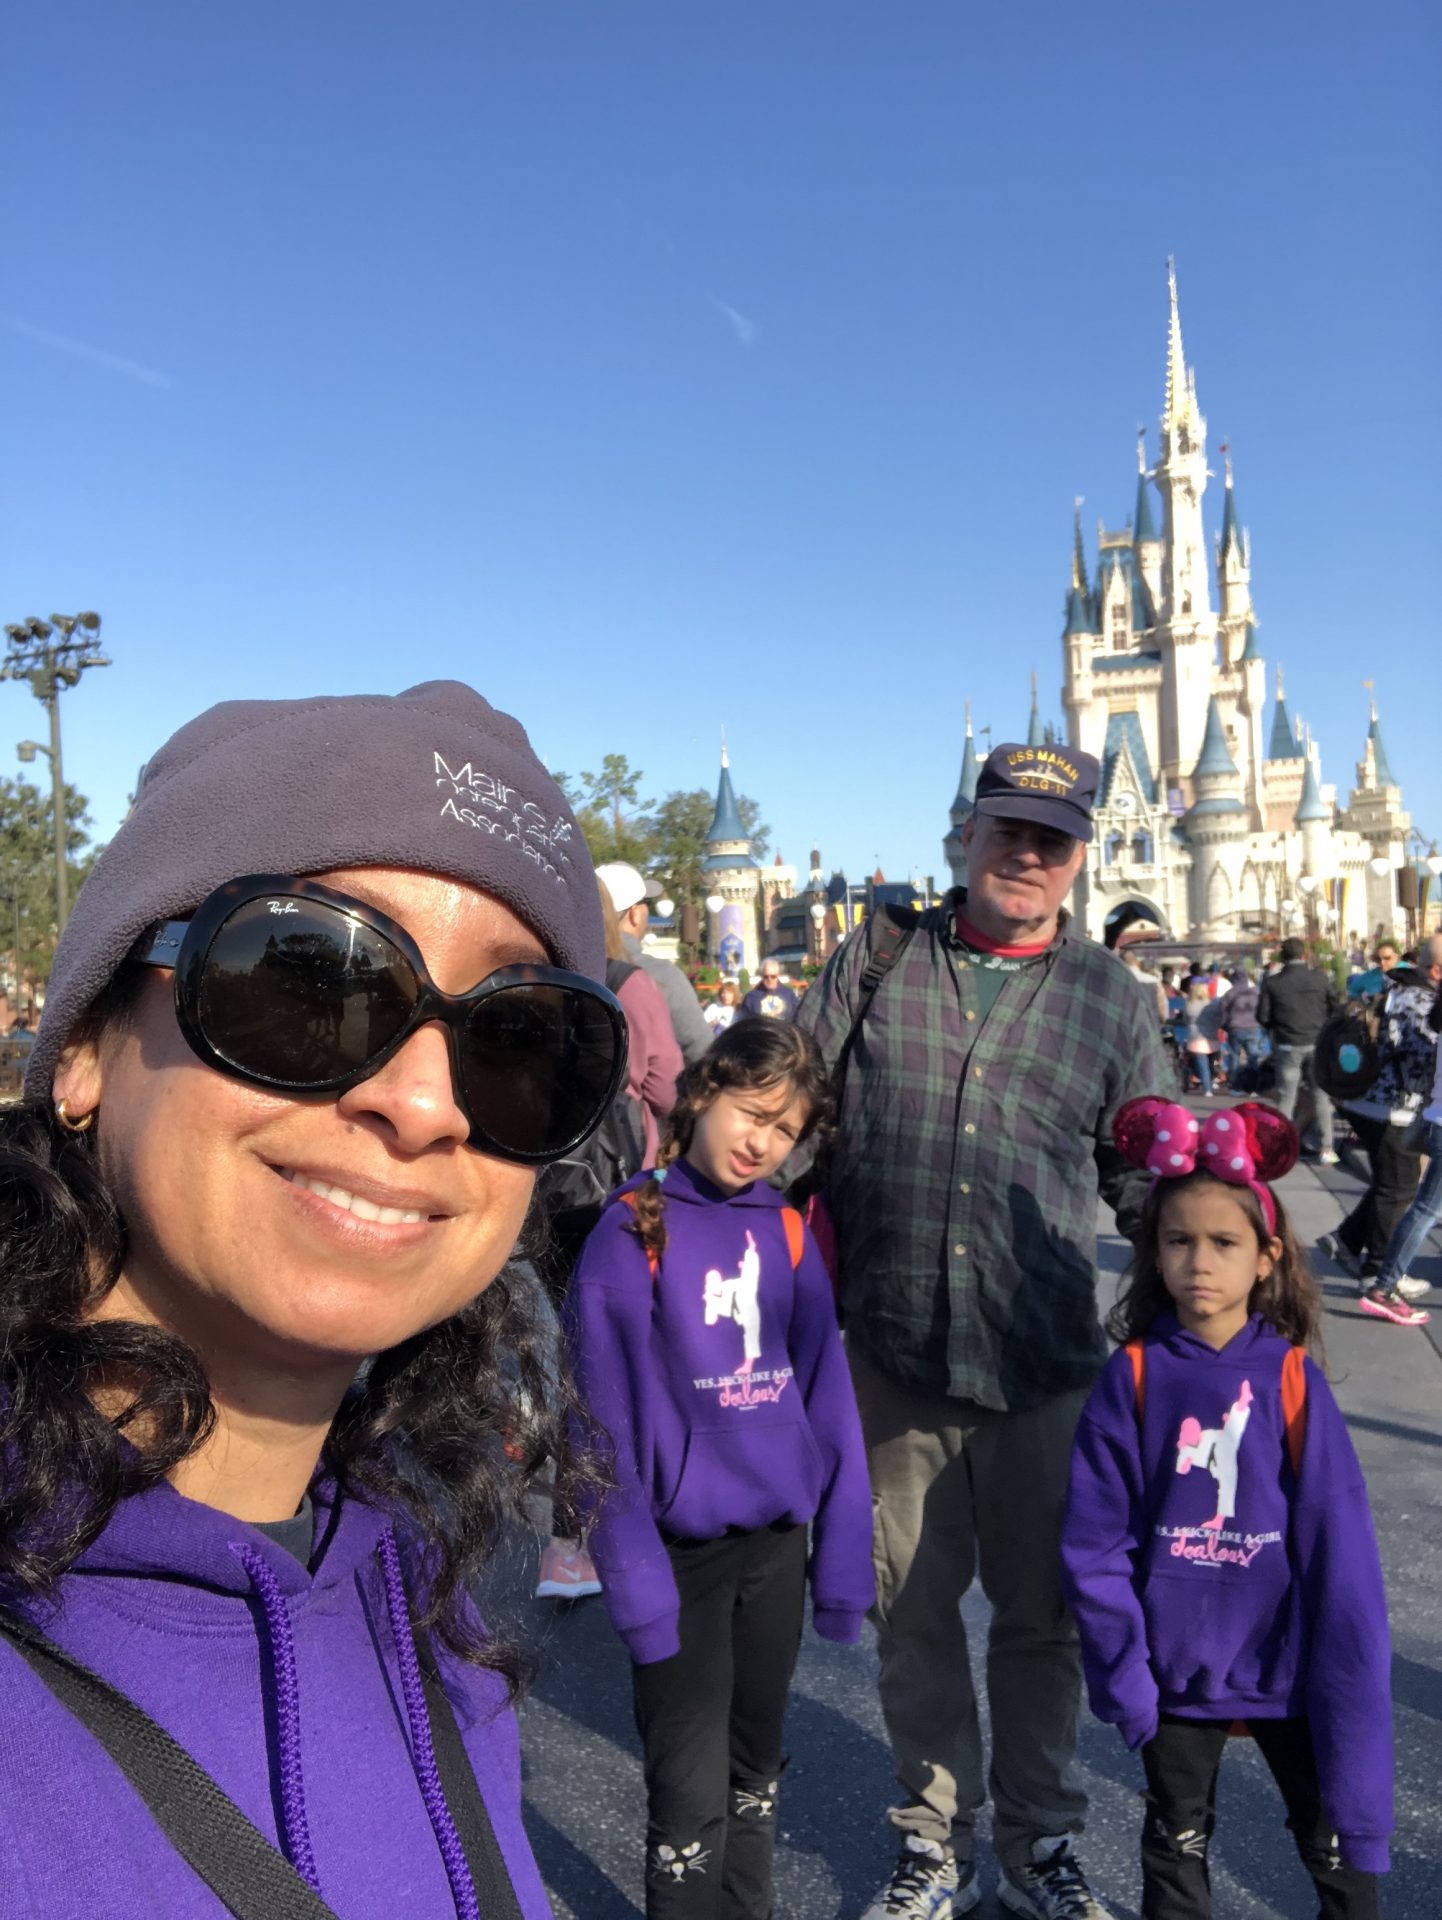 Tom and family at Magic Kingdom, Orlando. Girls birthday!<br />
Jan 2019.